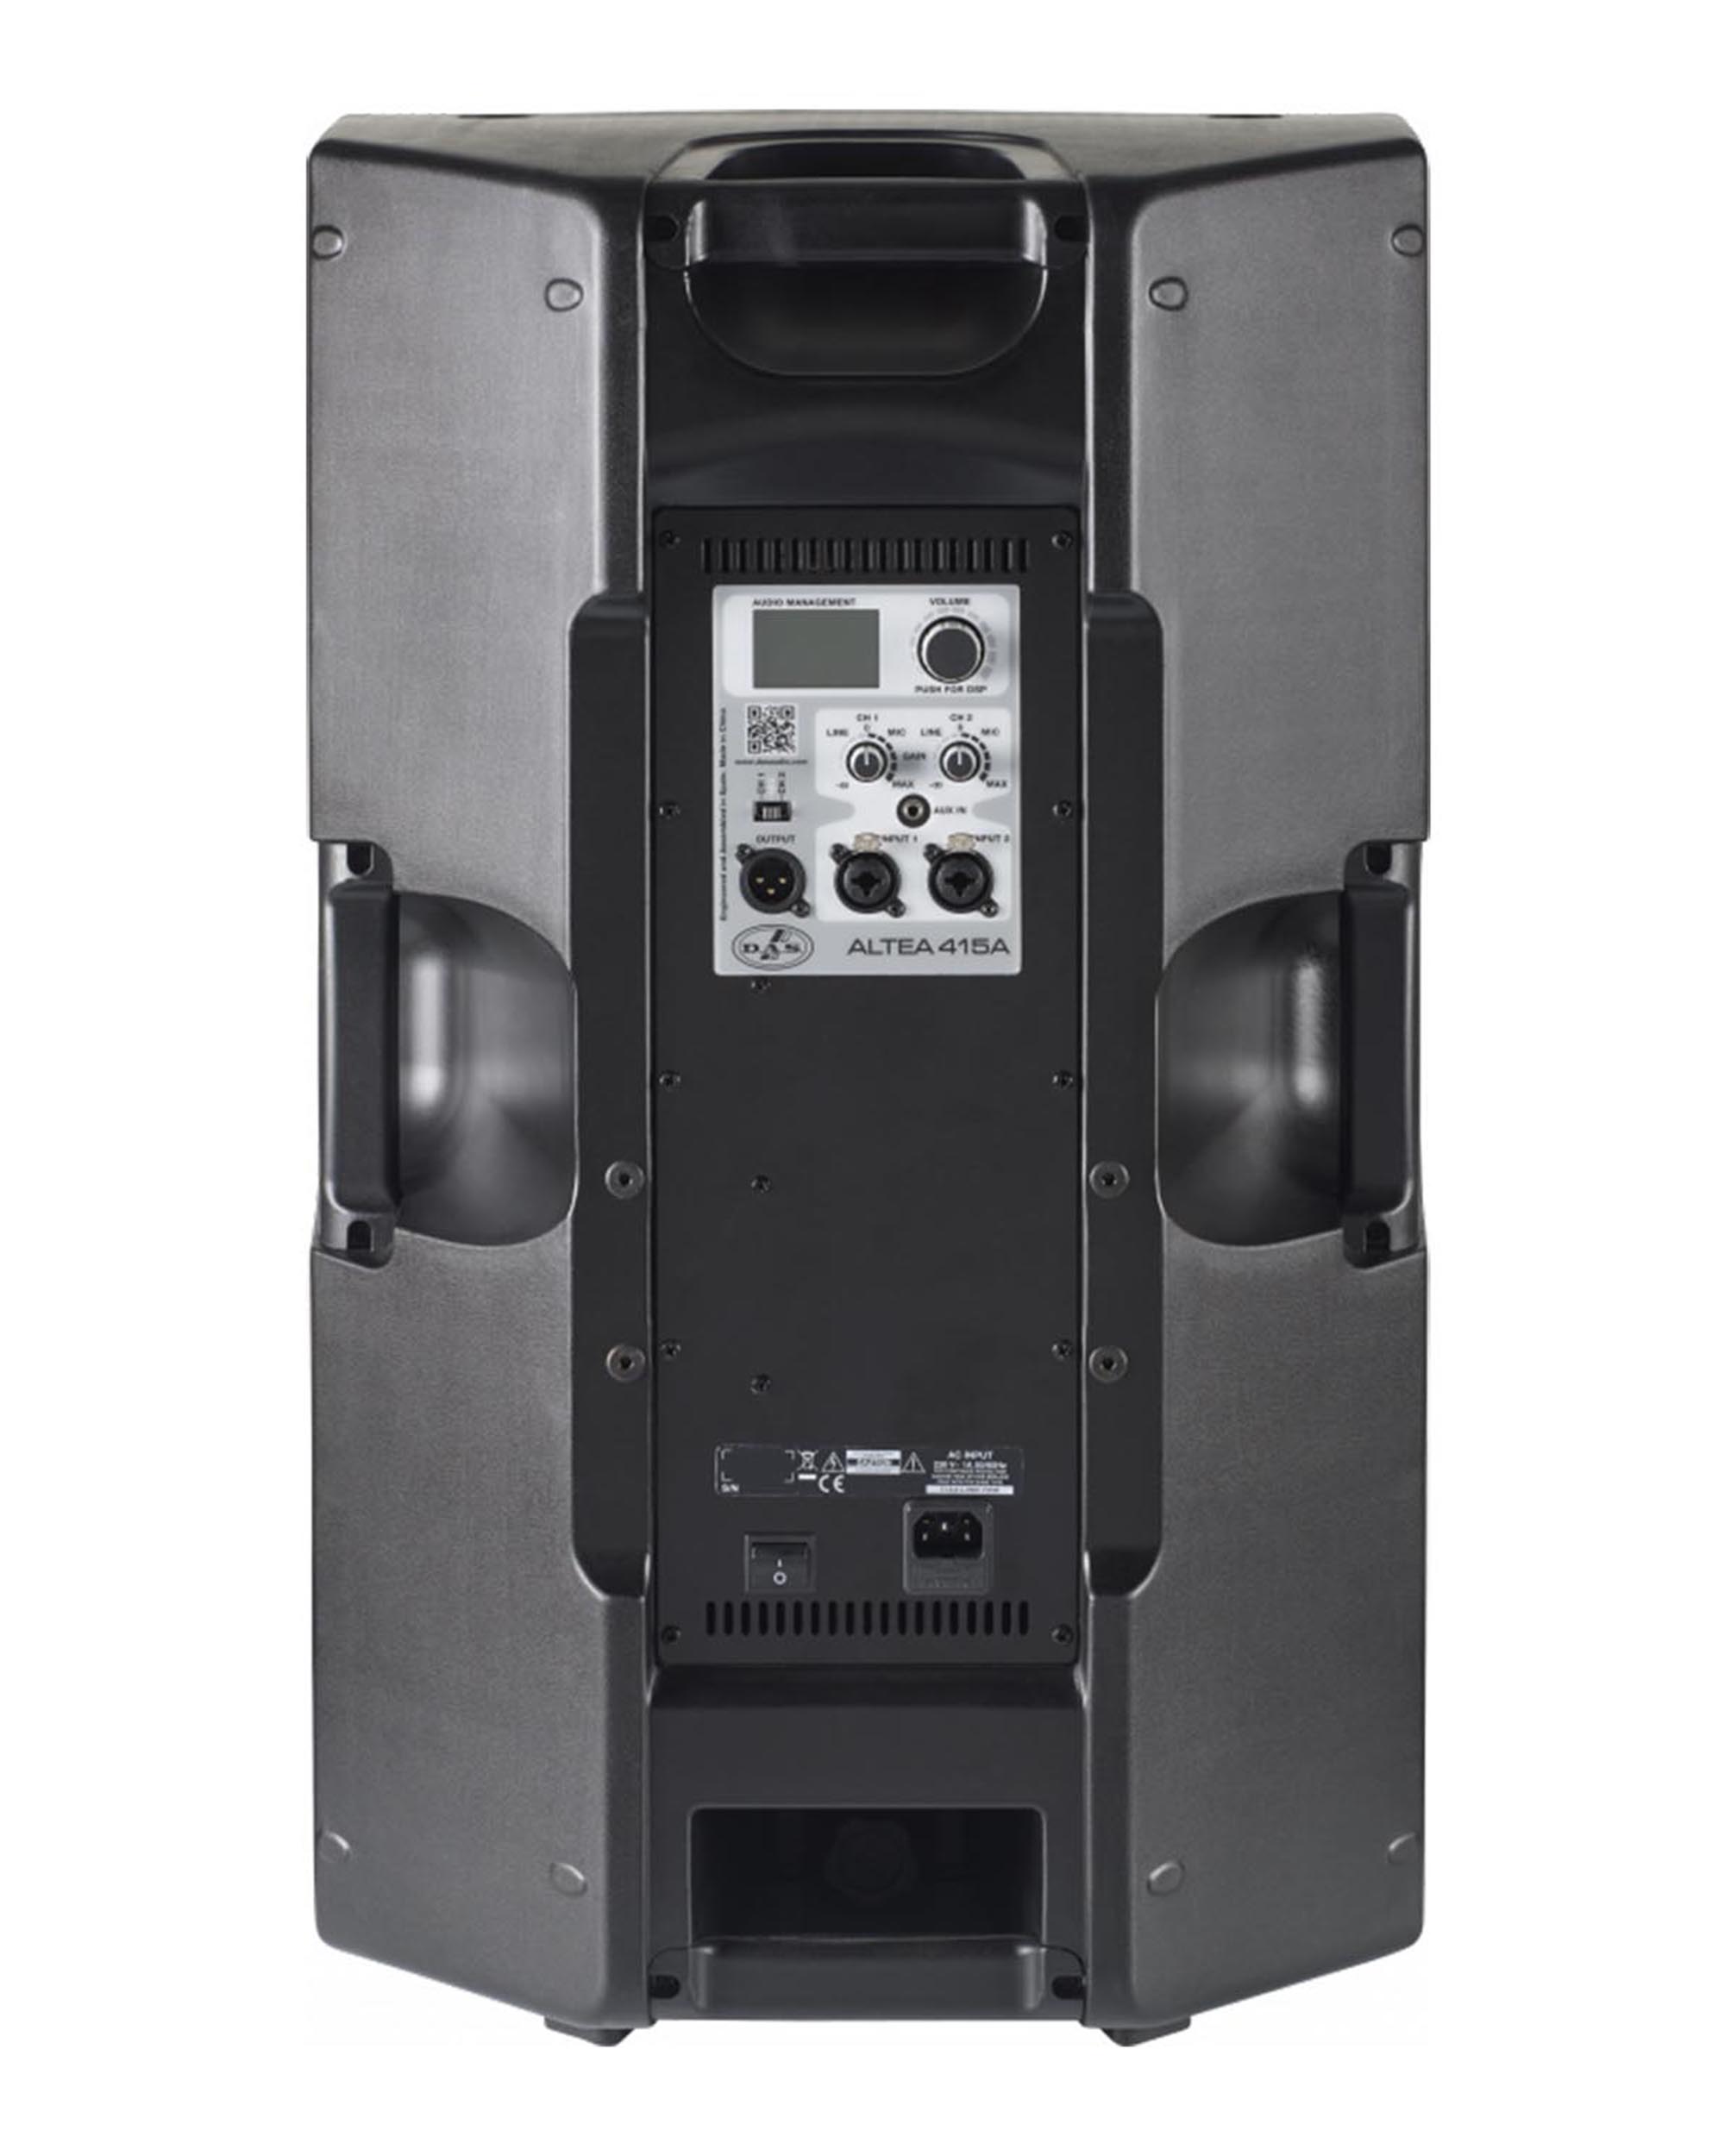 DAS Audio Altea 415A Powered Portable PA Speaker System - Black